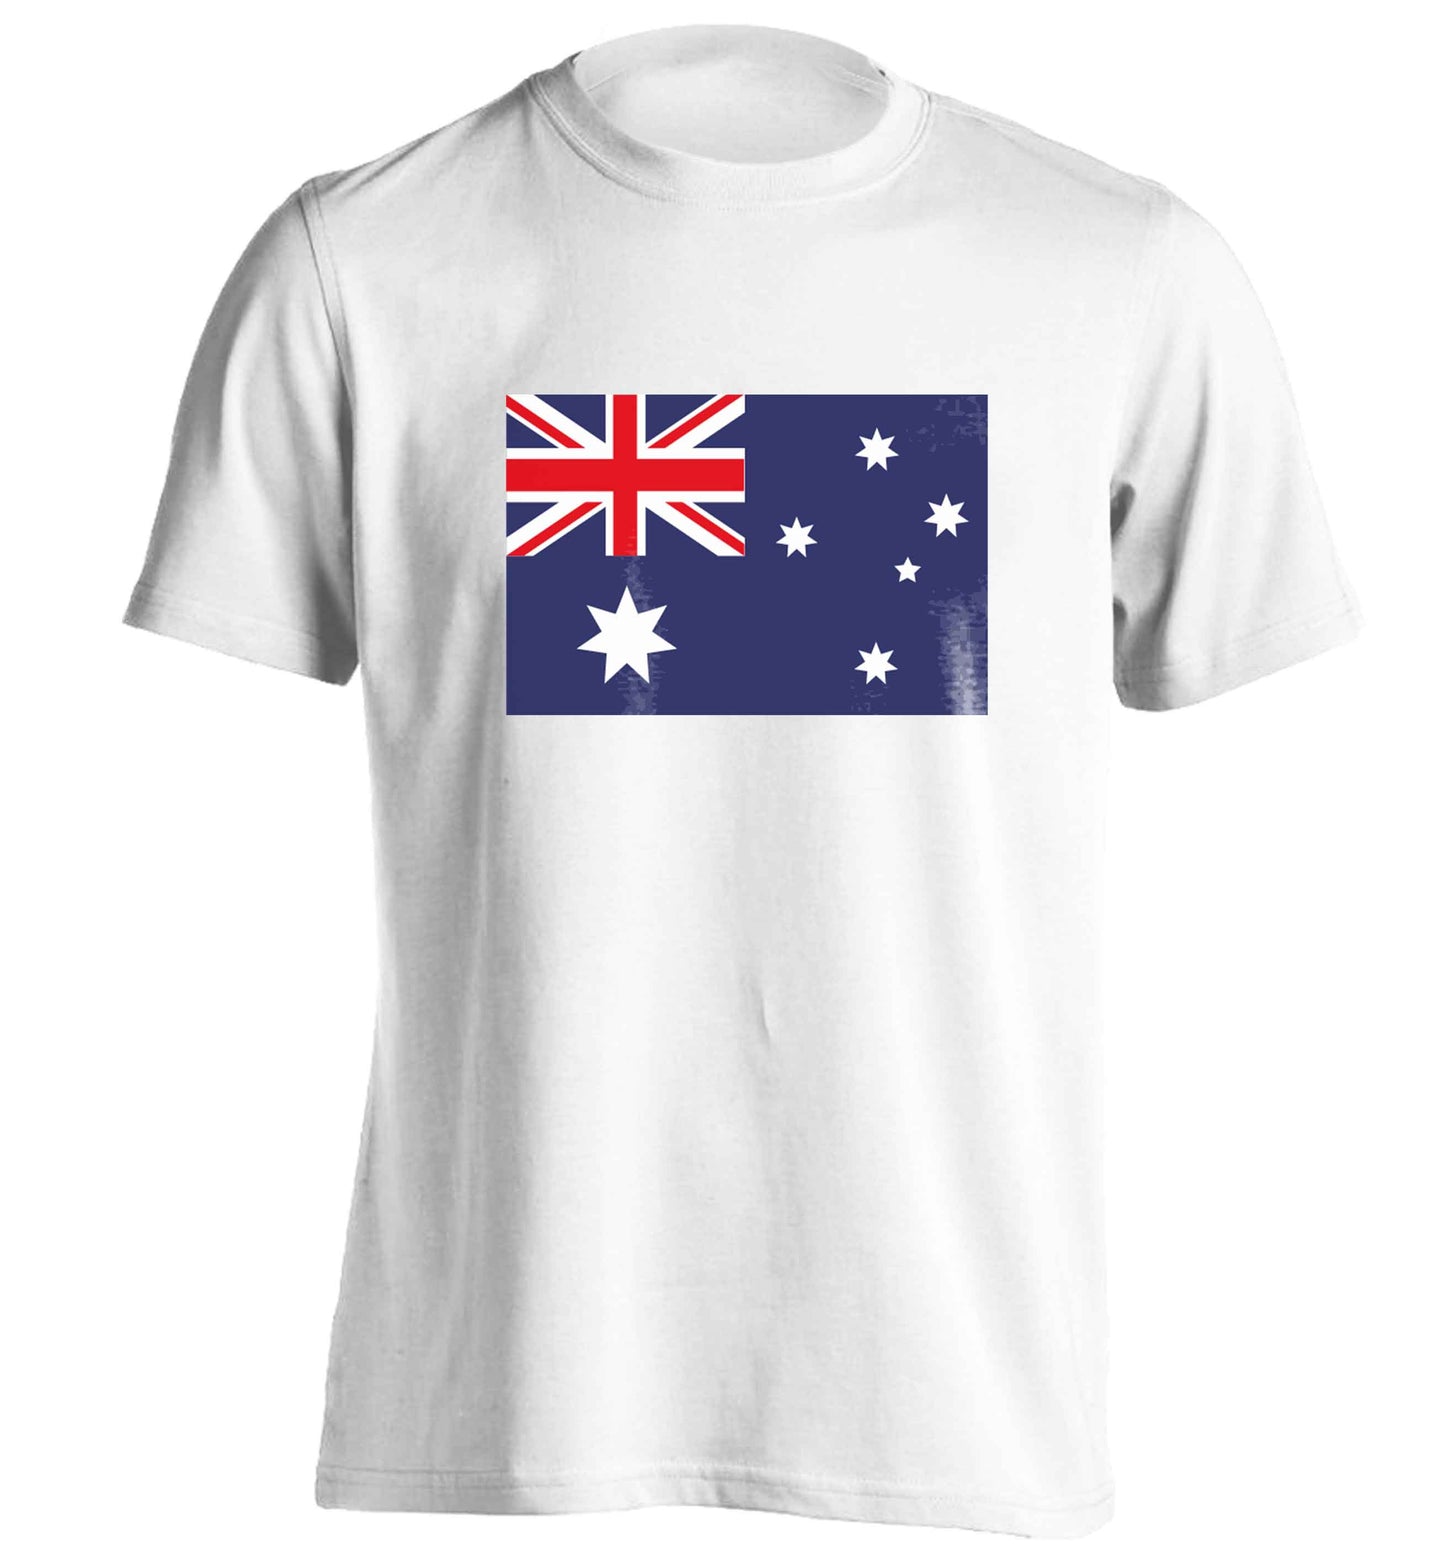 Australian Flag adults unisex white Tshirt 2XL